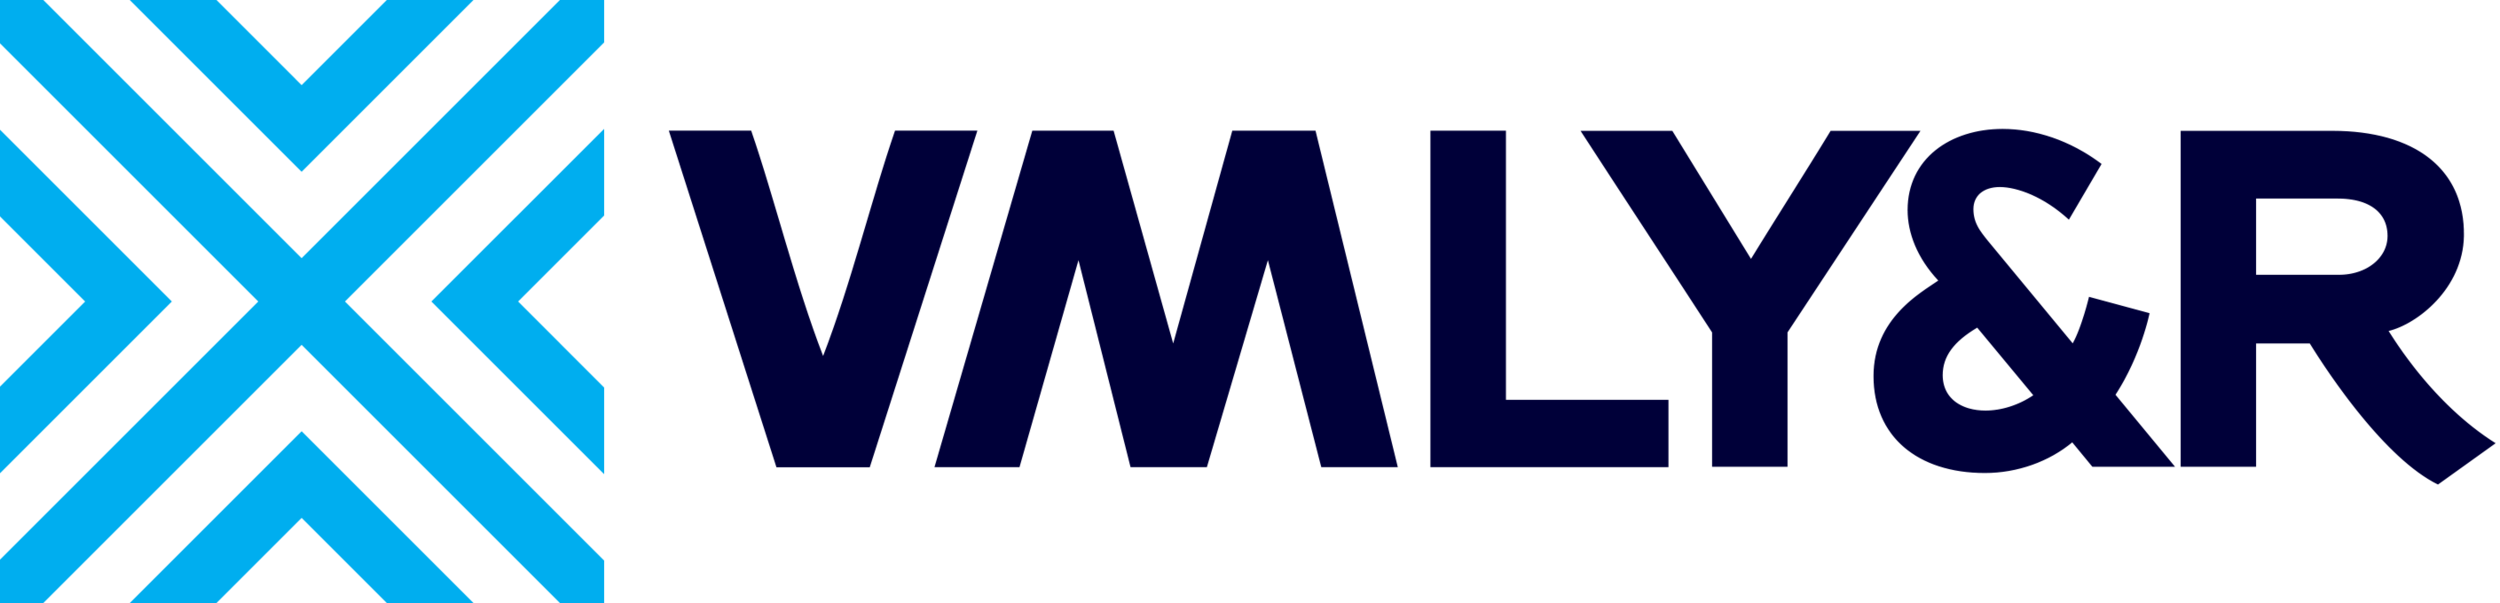 VMLYR-Logo[1].png